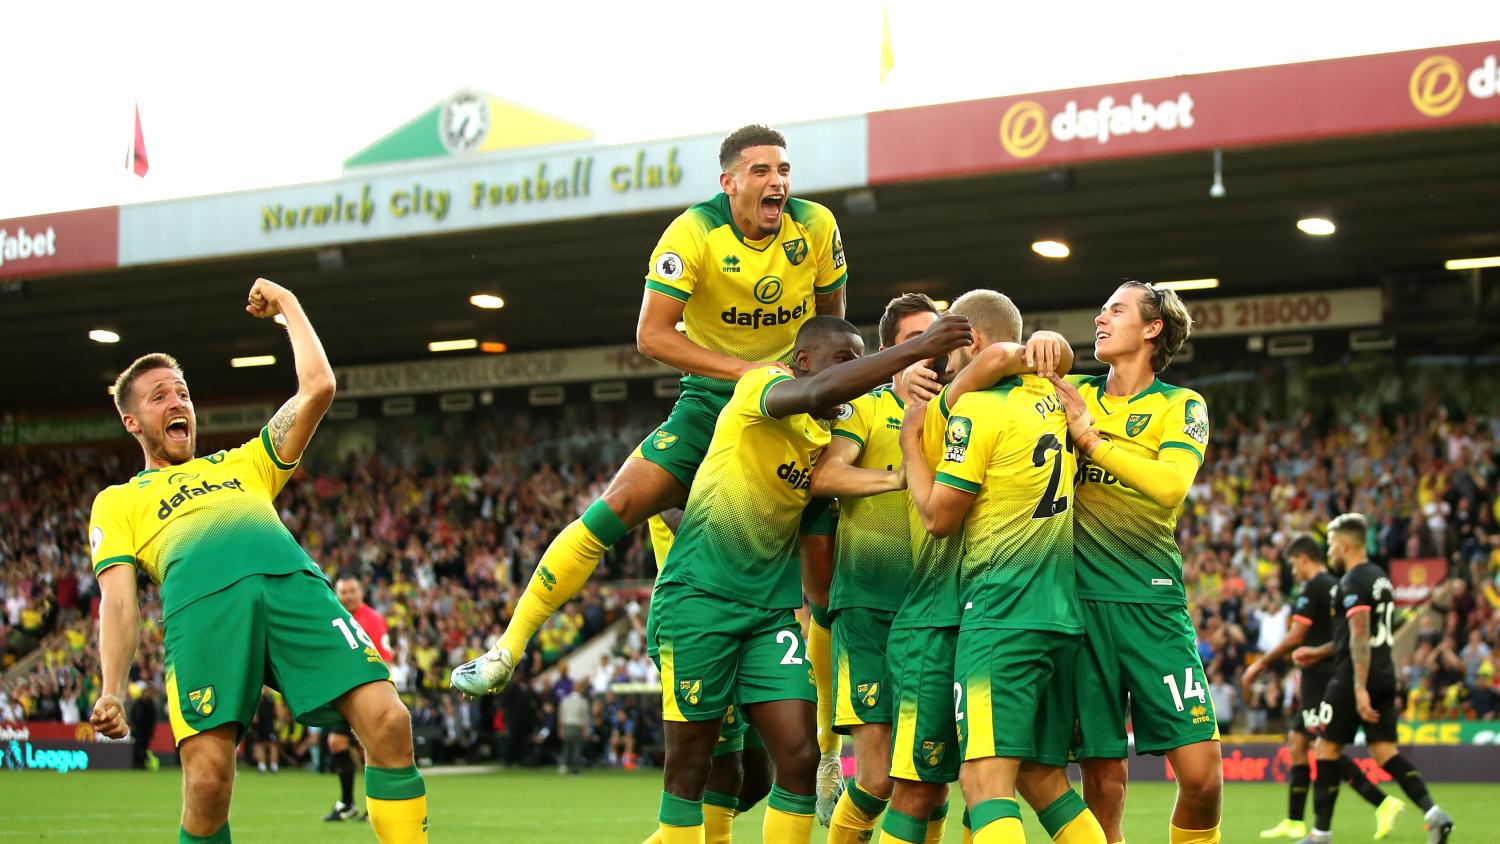 angreb Faderlig skrå Norwich vs Man City Highlights: Otamendi Throws Game Away